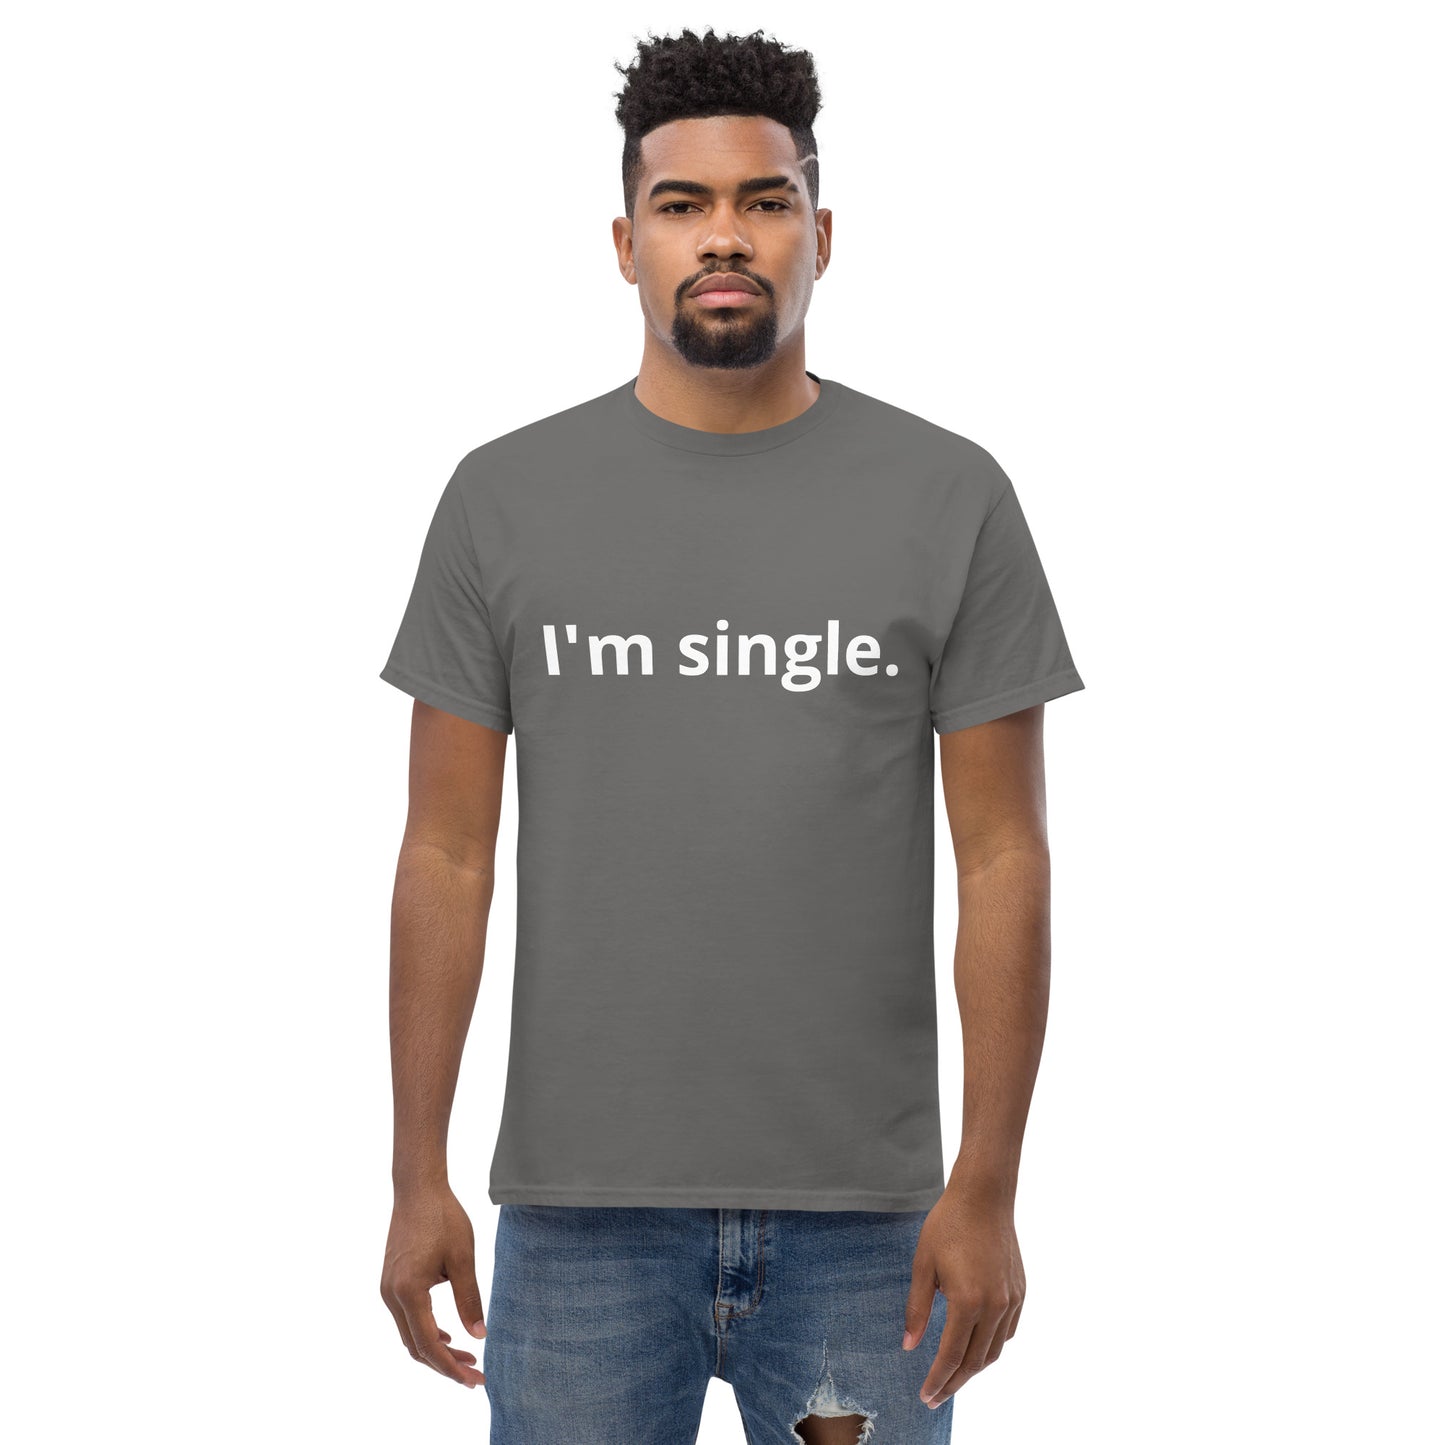 I'm single.